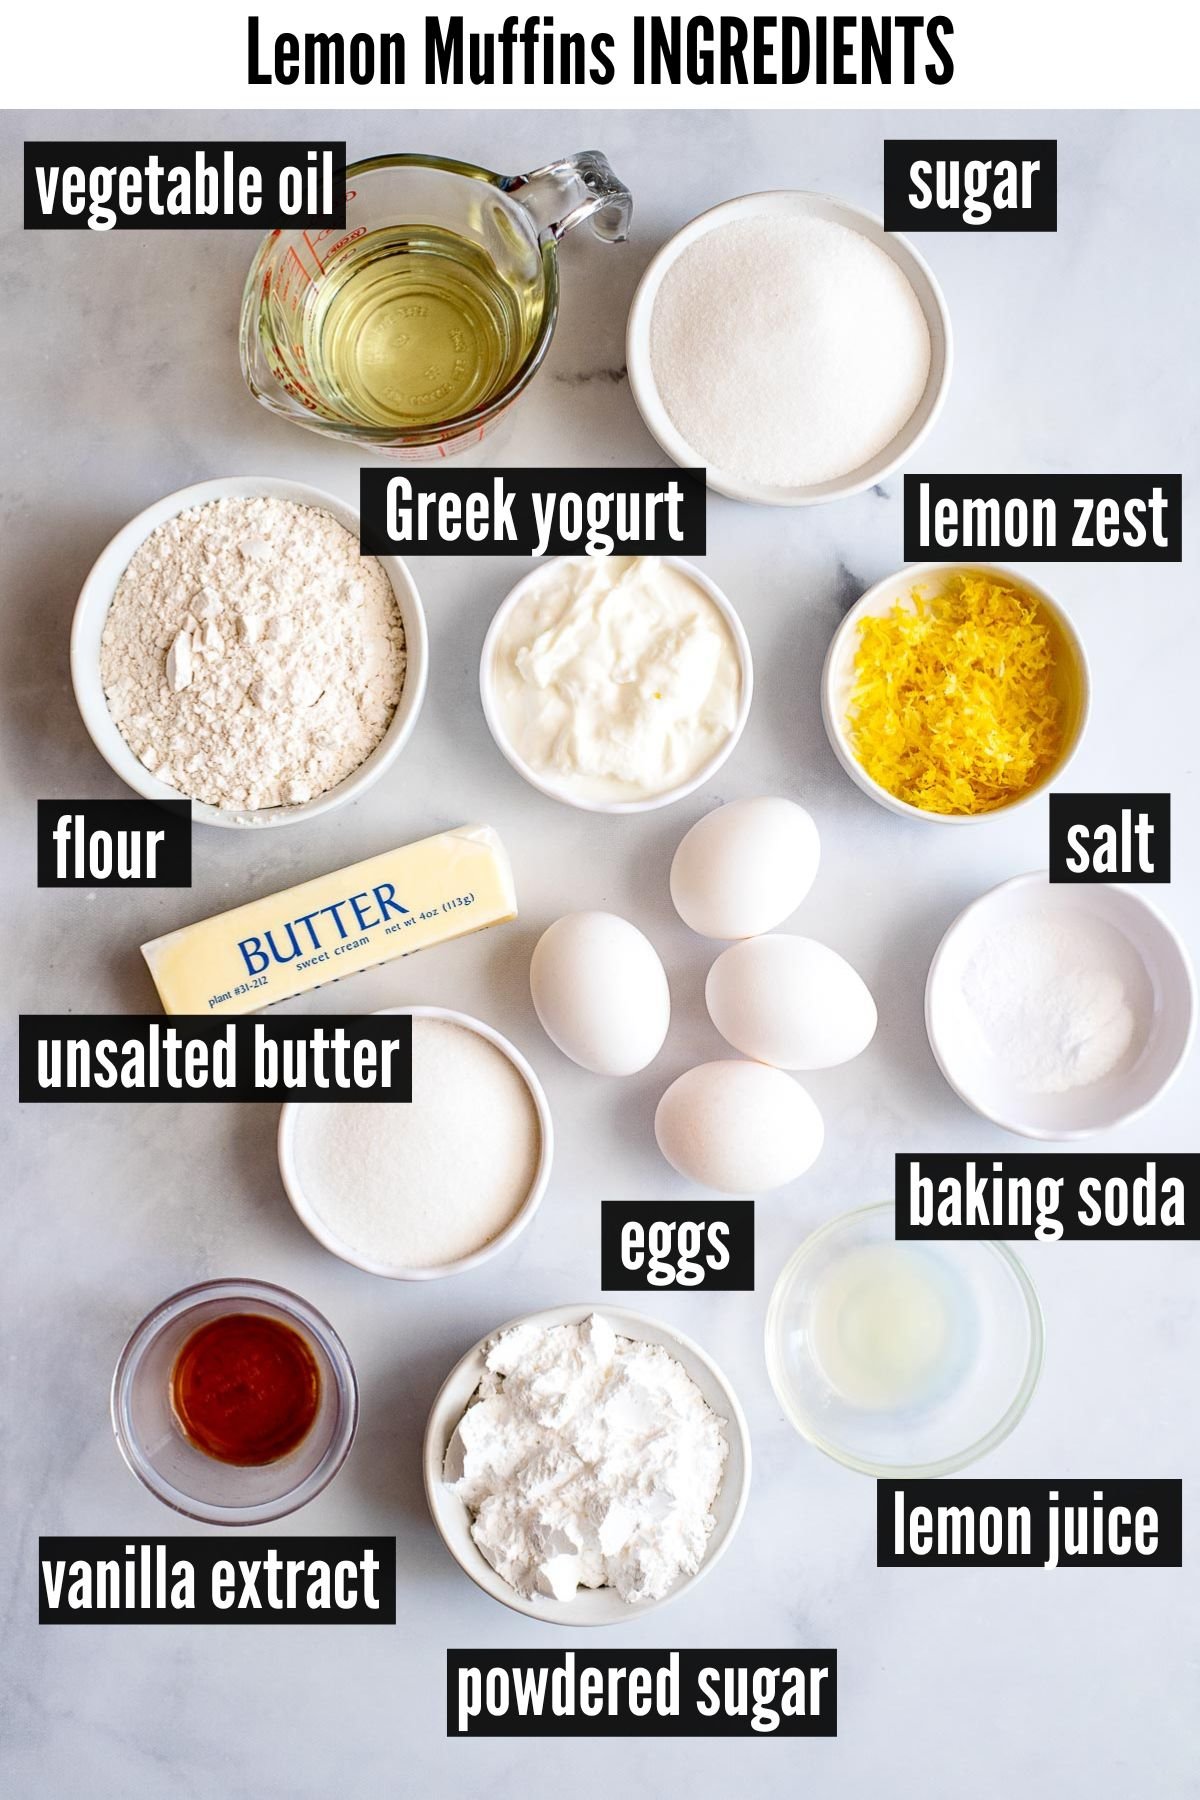 lemon muffins labelled ingredients.